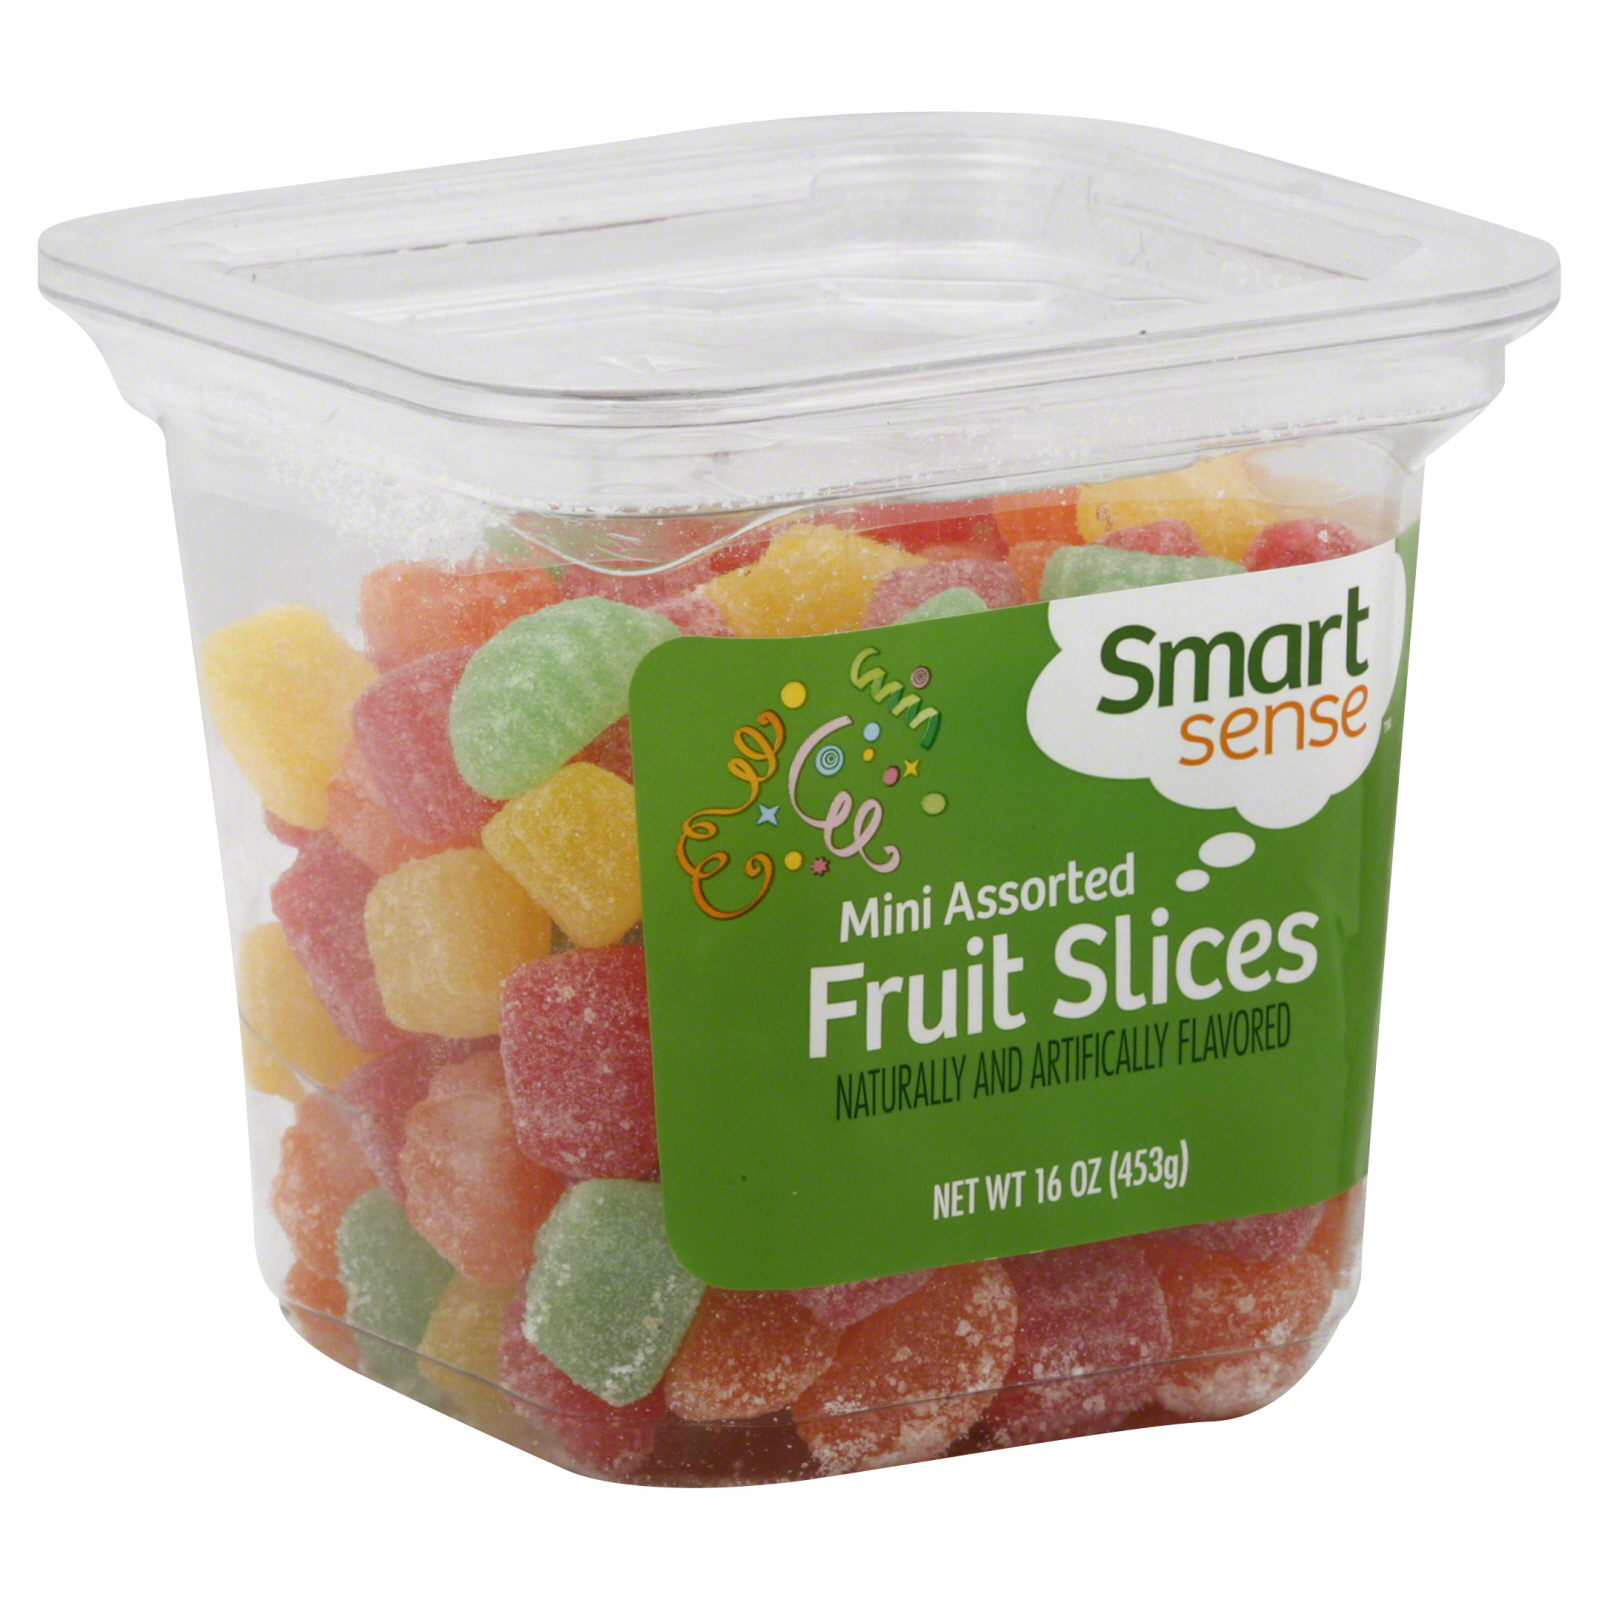 Smart Sense Fruit Slices, Mini Assorted, 16 oz (453 g)